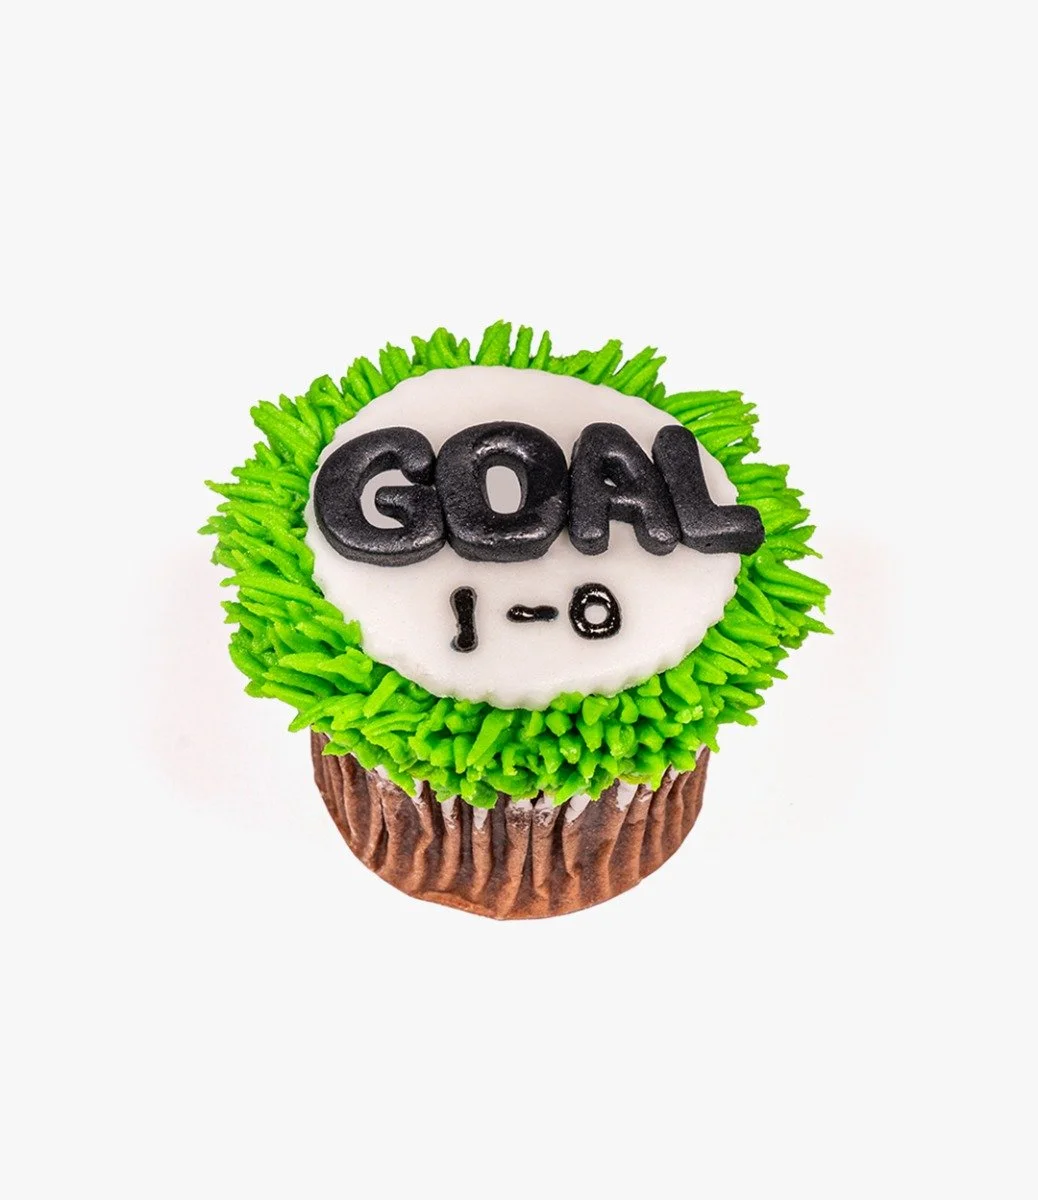 FIFA Goal Cupcake by Hummingbird Bakery